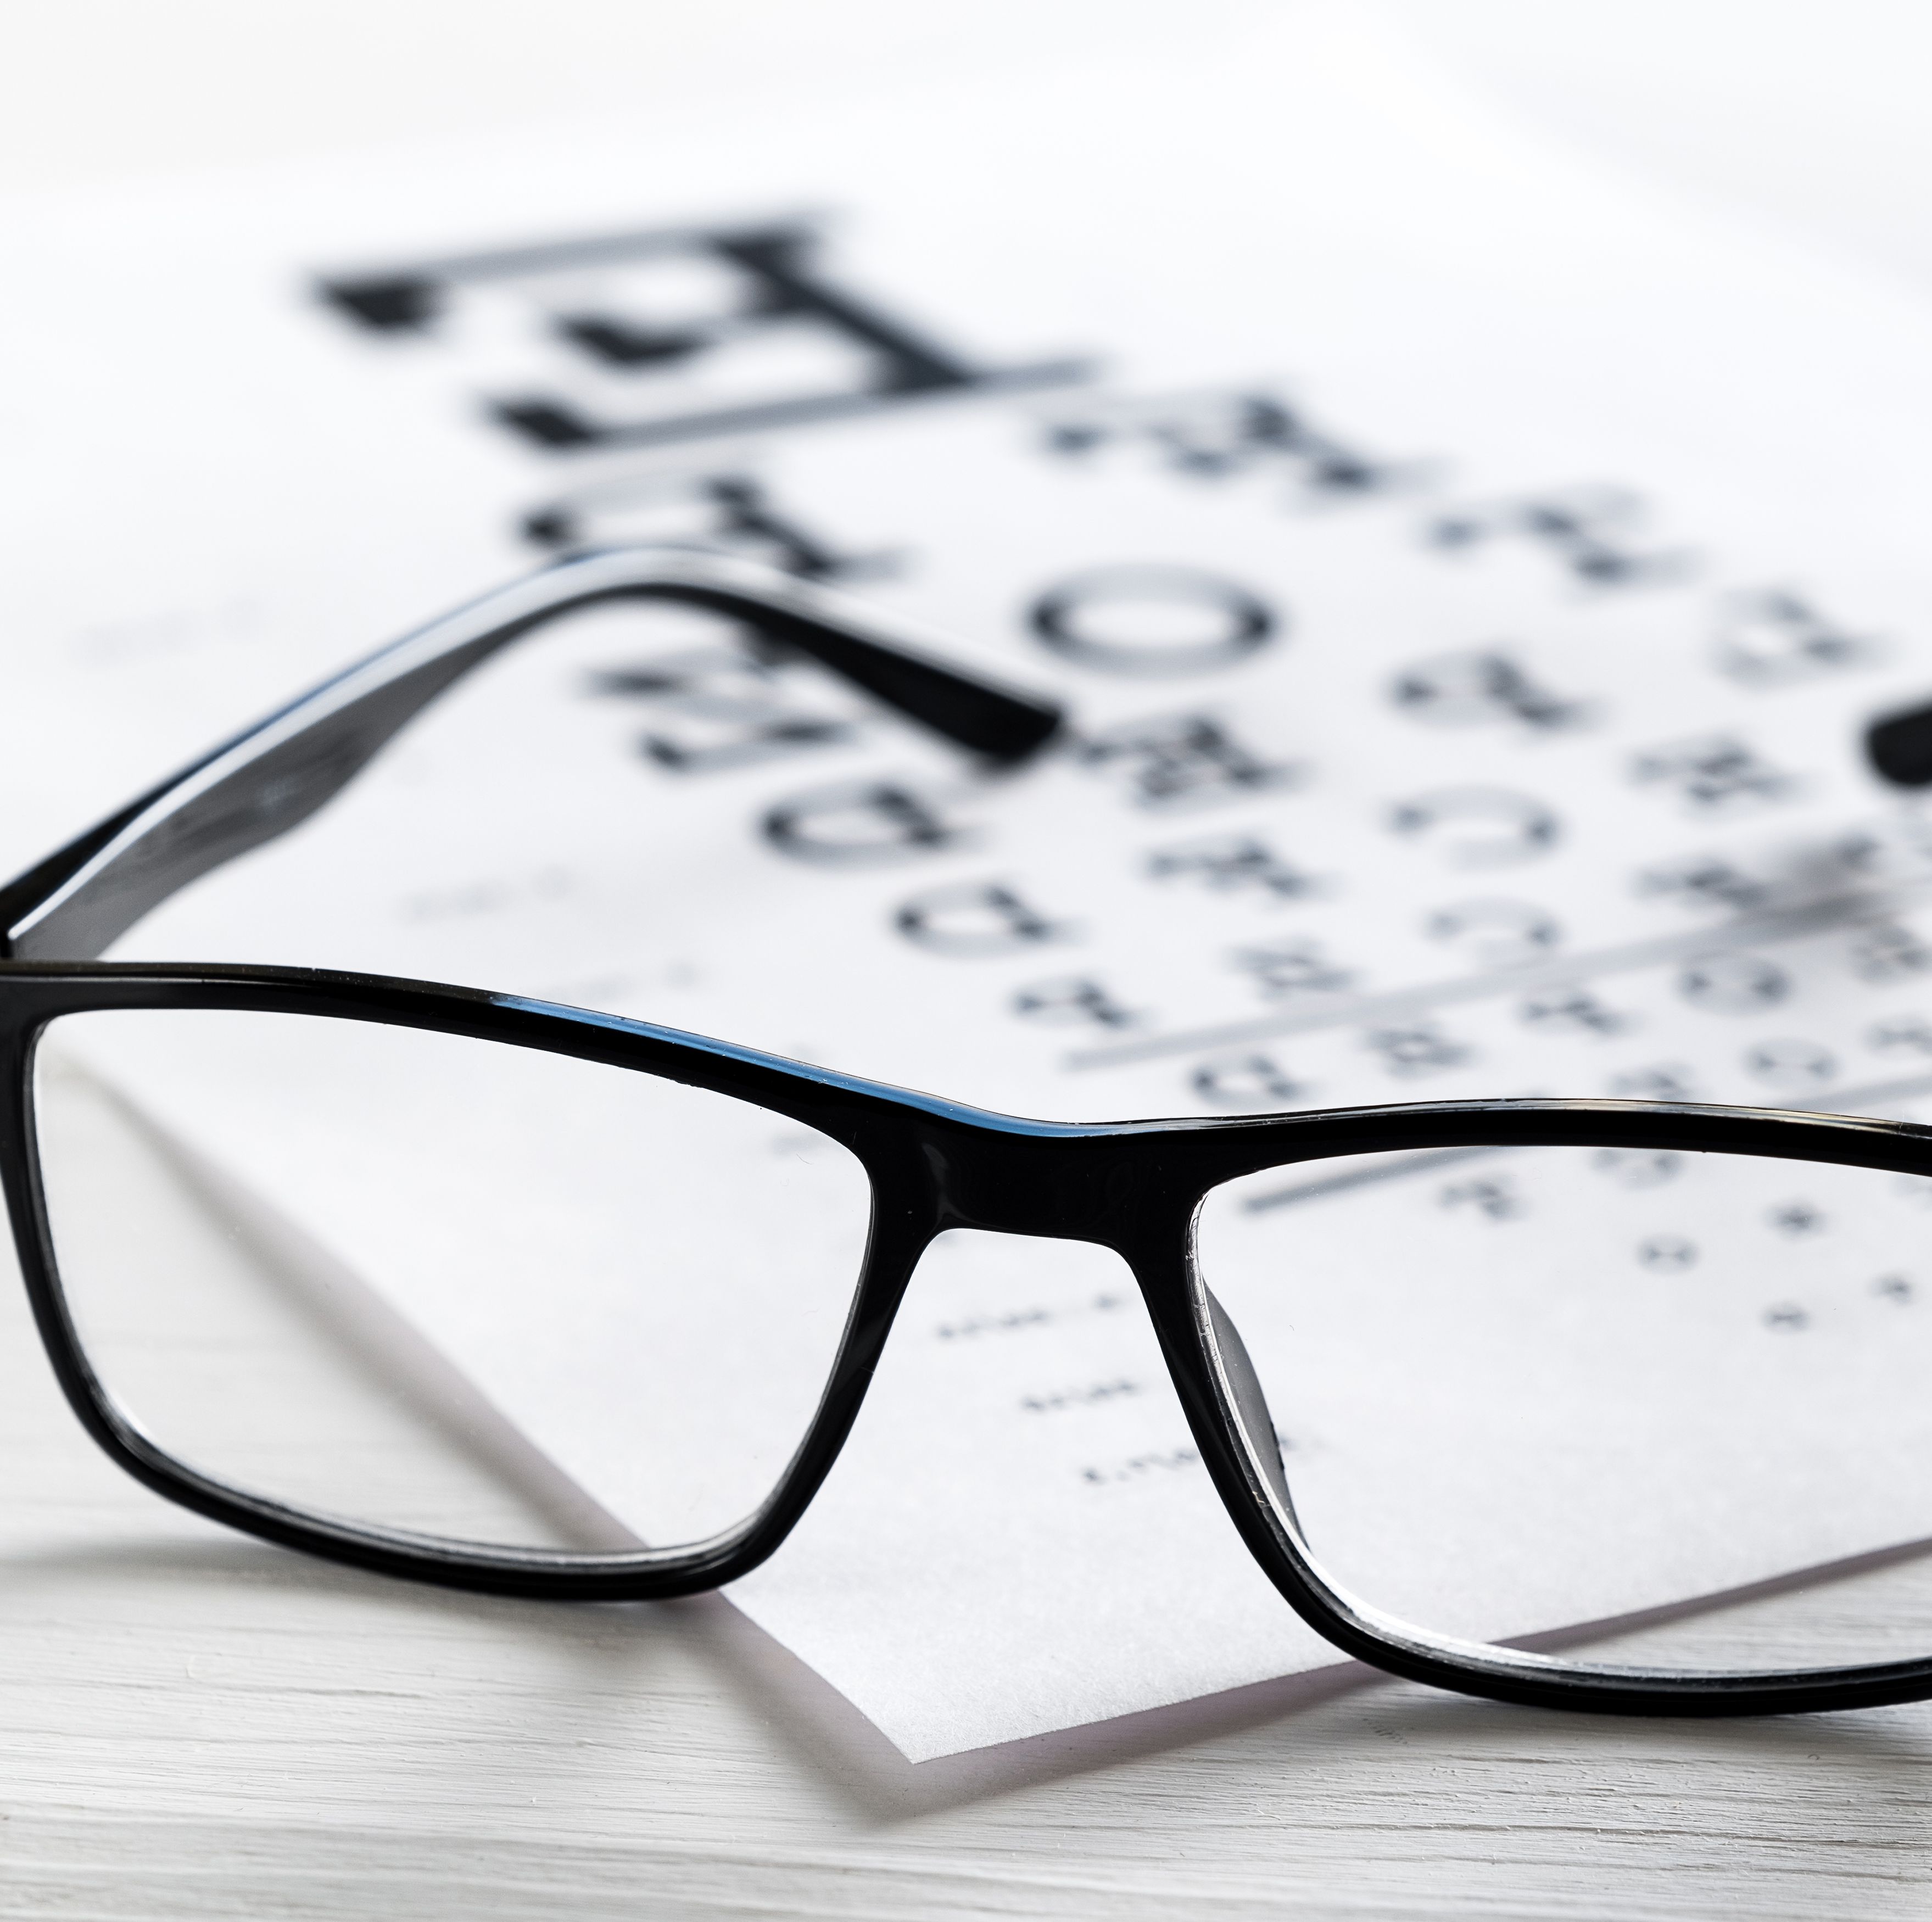 Can You Make Your Own DIY Prescription Eyeglasses?